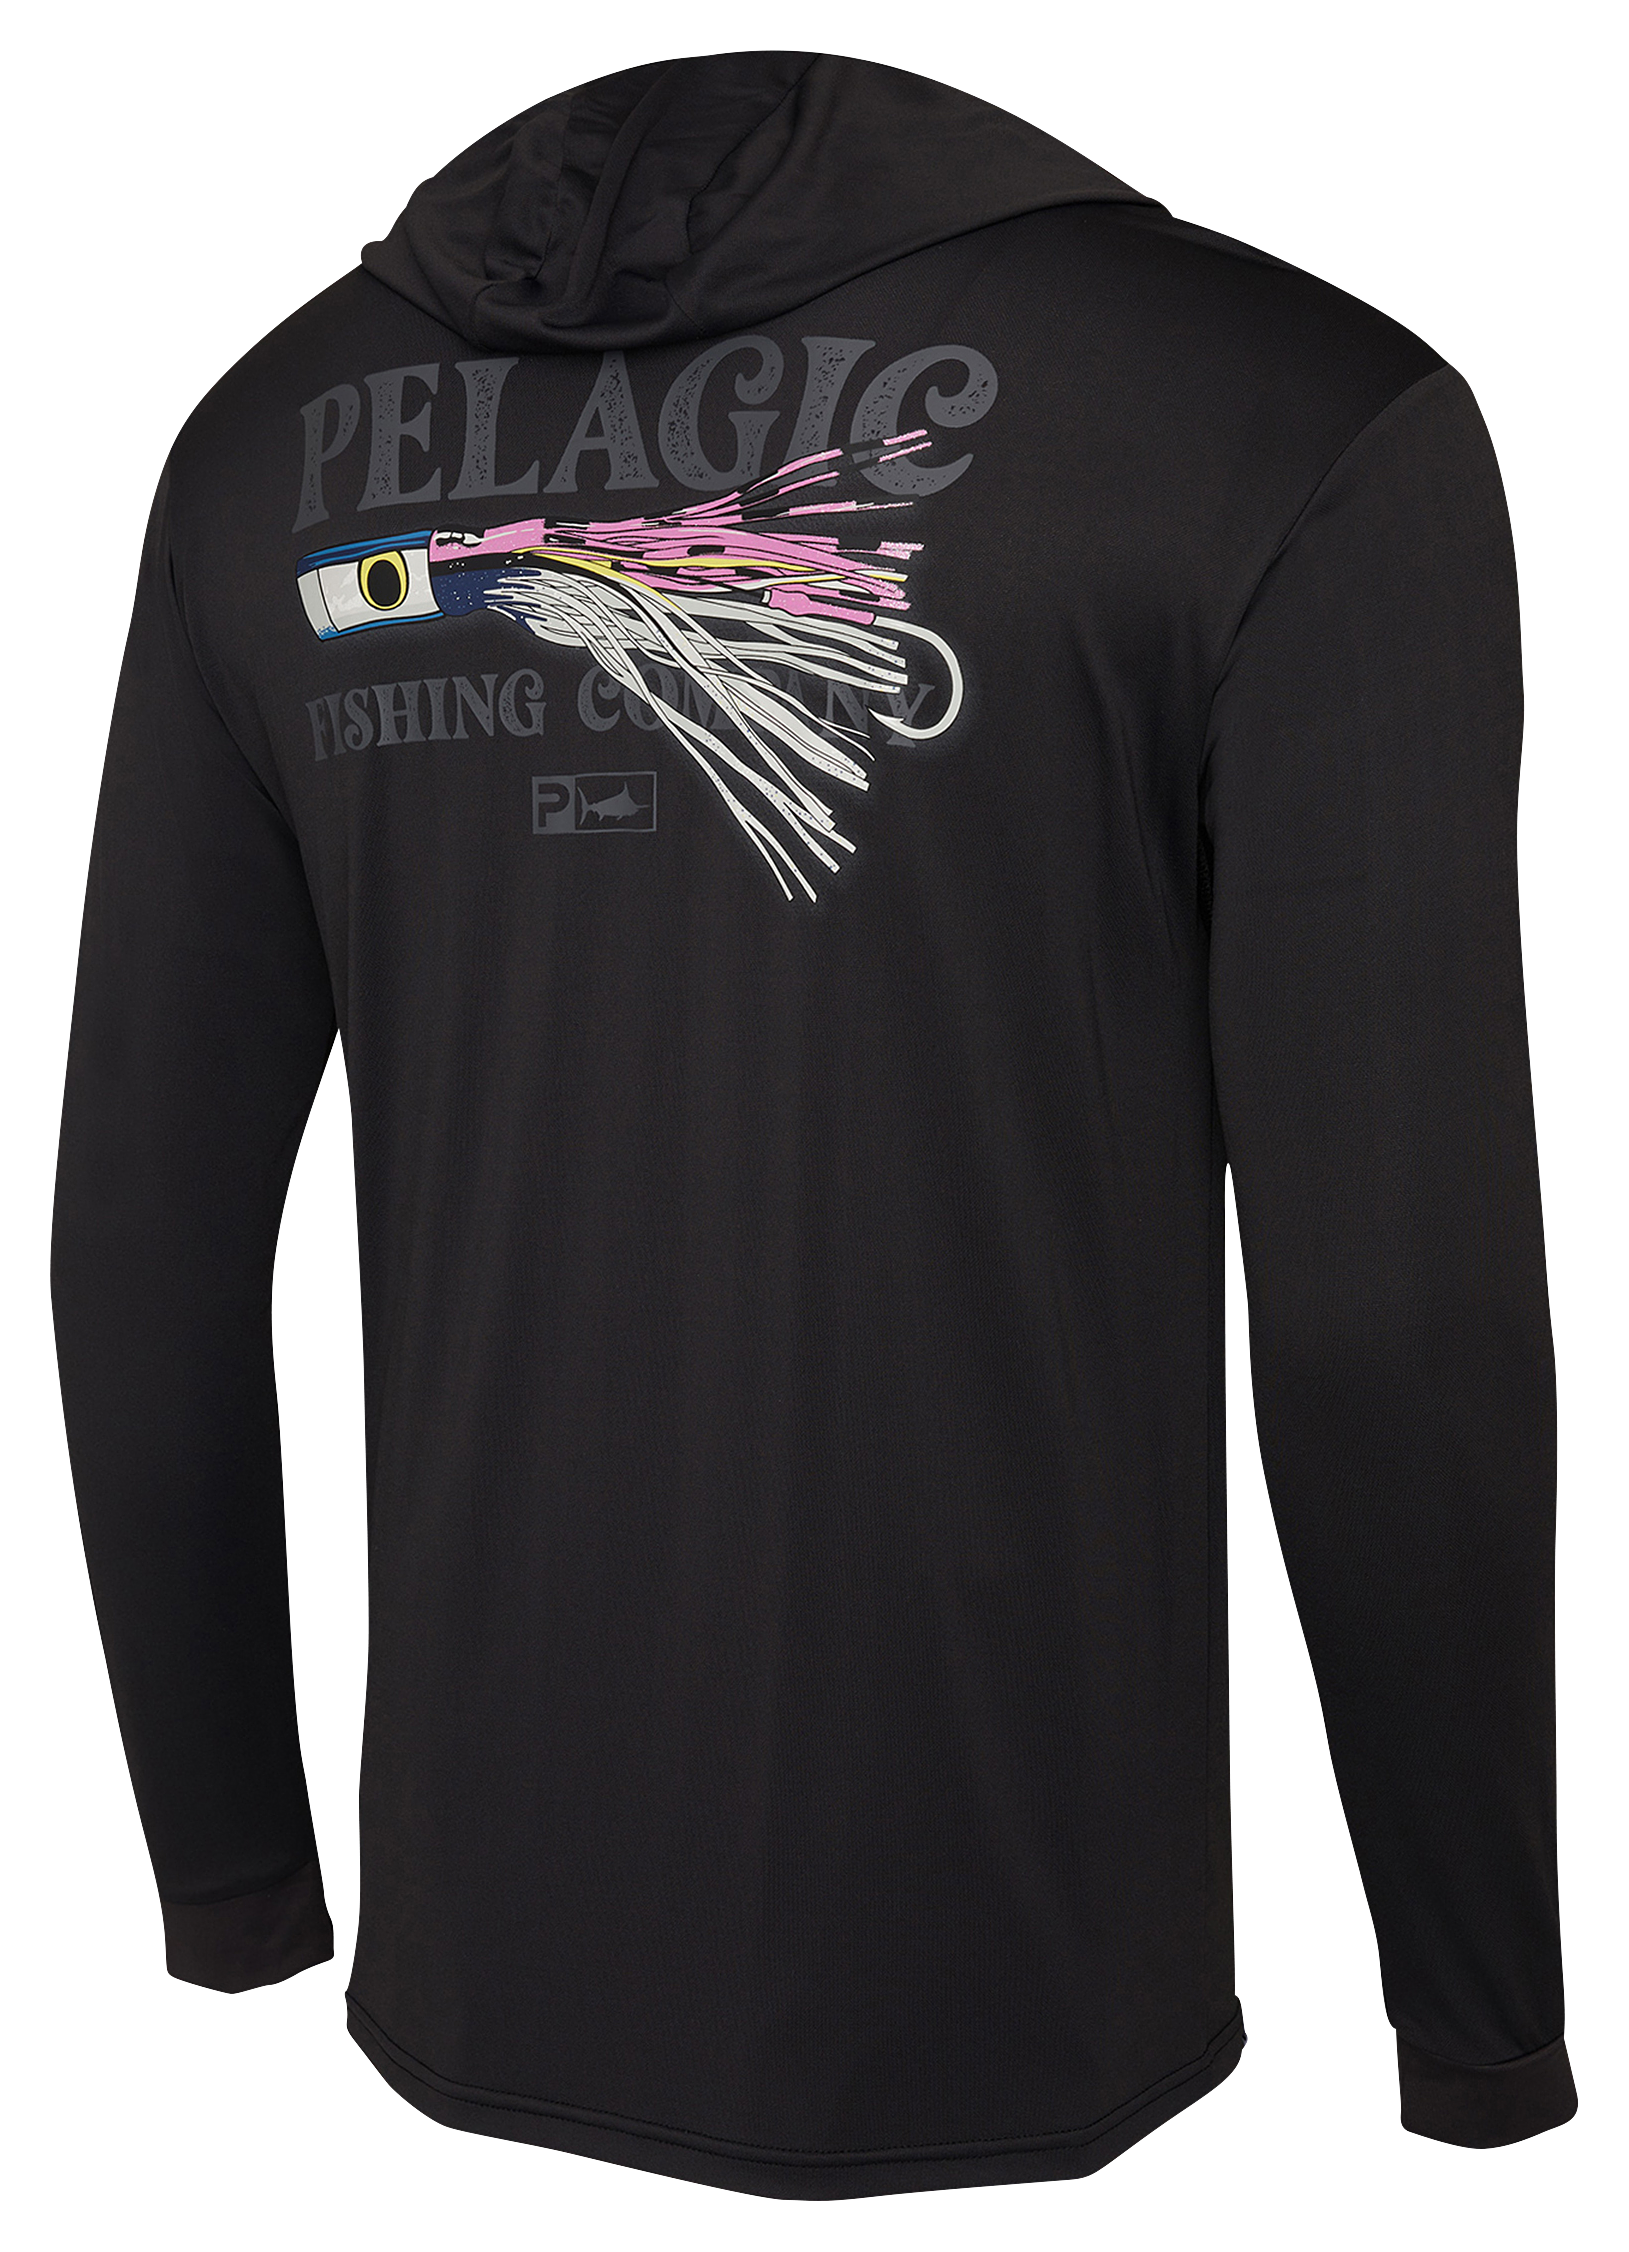 Pelagic Aquatek Lured Hooded Long-Sleeve Shirt for Men - Black/Lured - XL